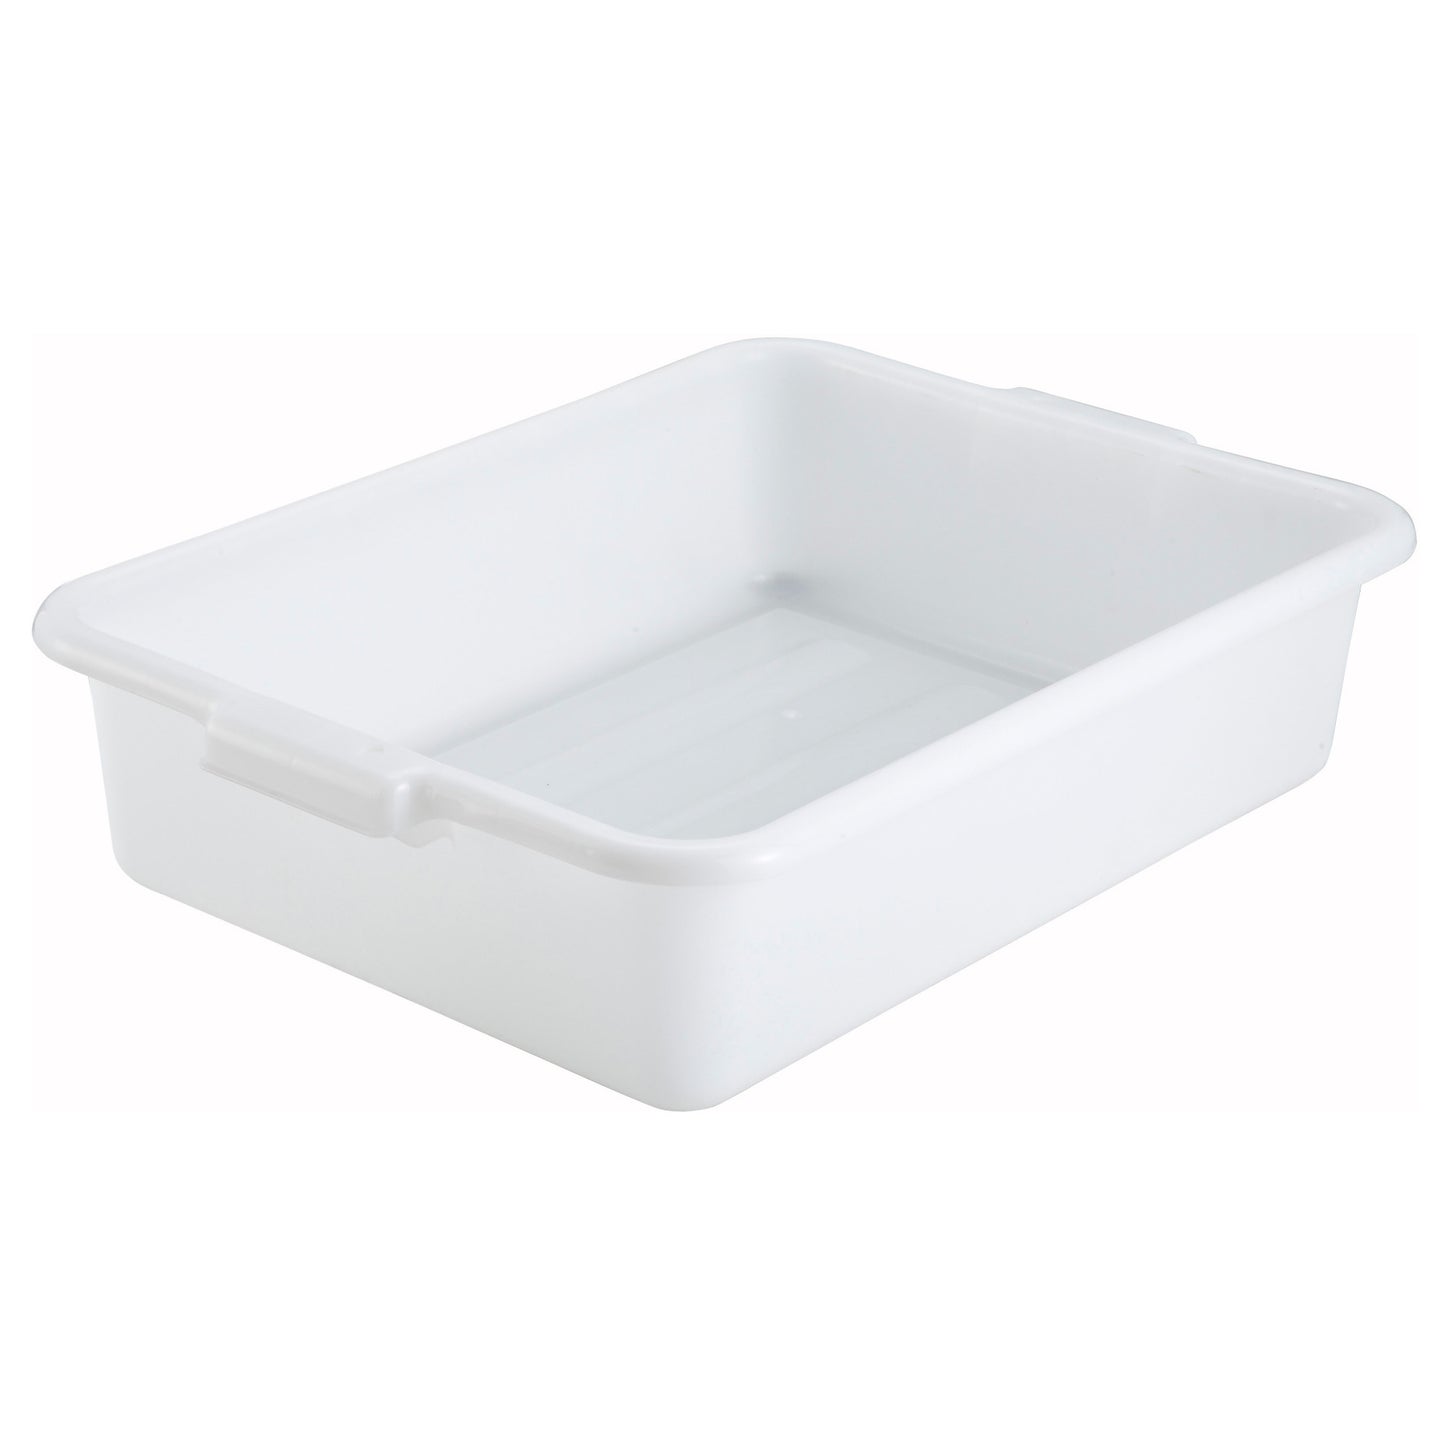 PL-5W - Standard Weight Polypropylene Dish Box, 5" Depth - White